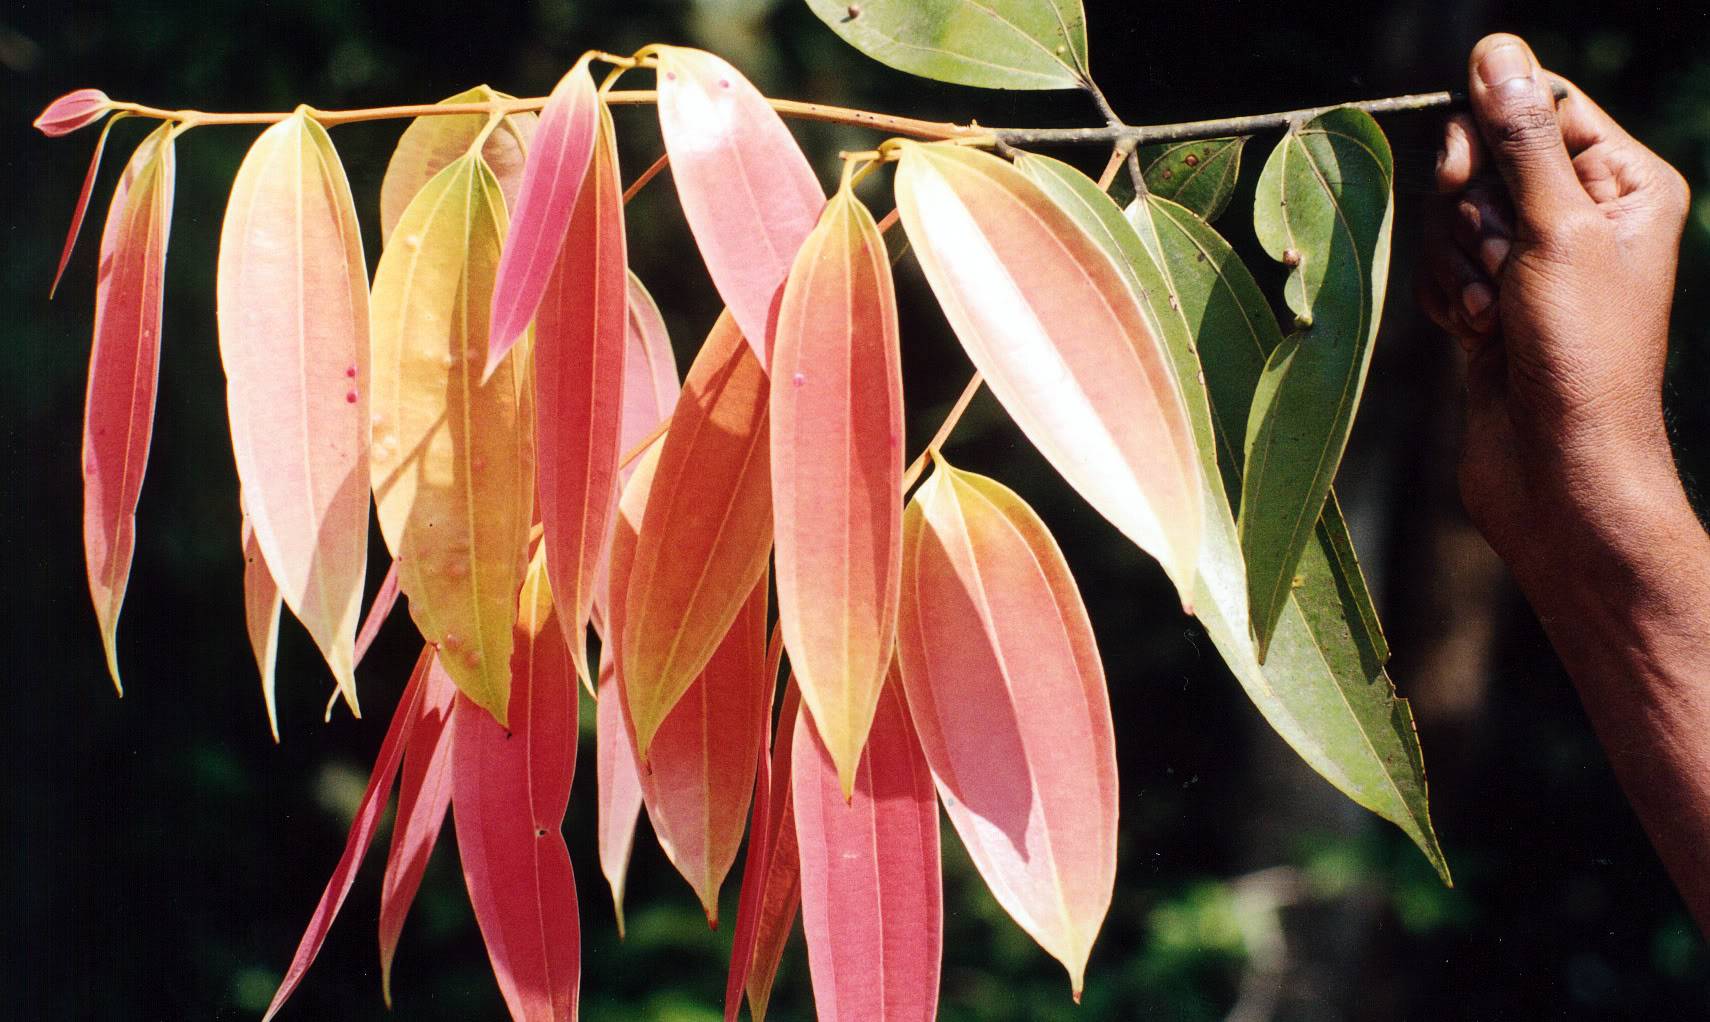 Cinnamon new leaves emerge pale to pinkish.